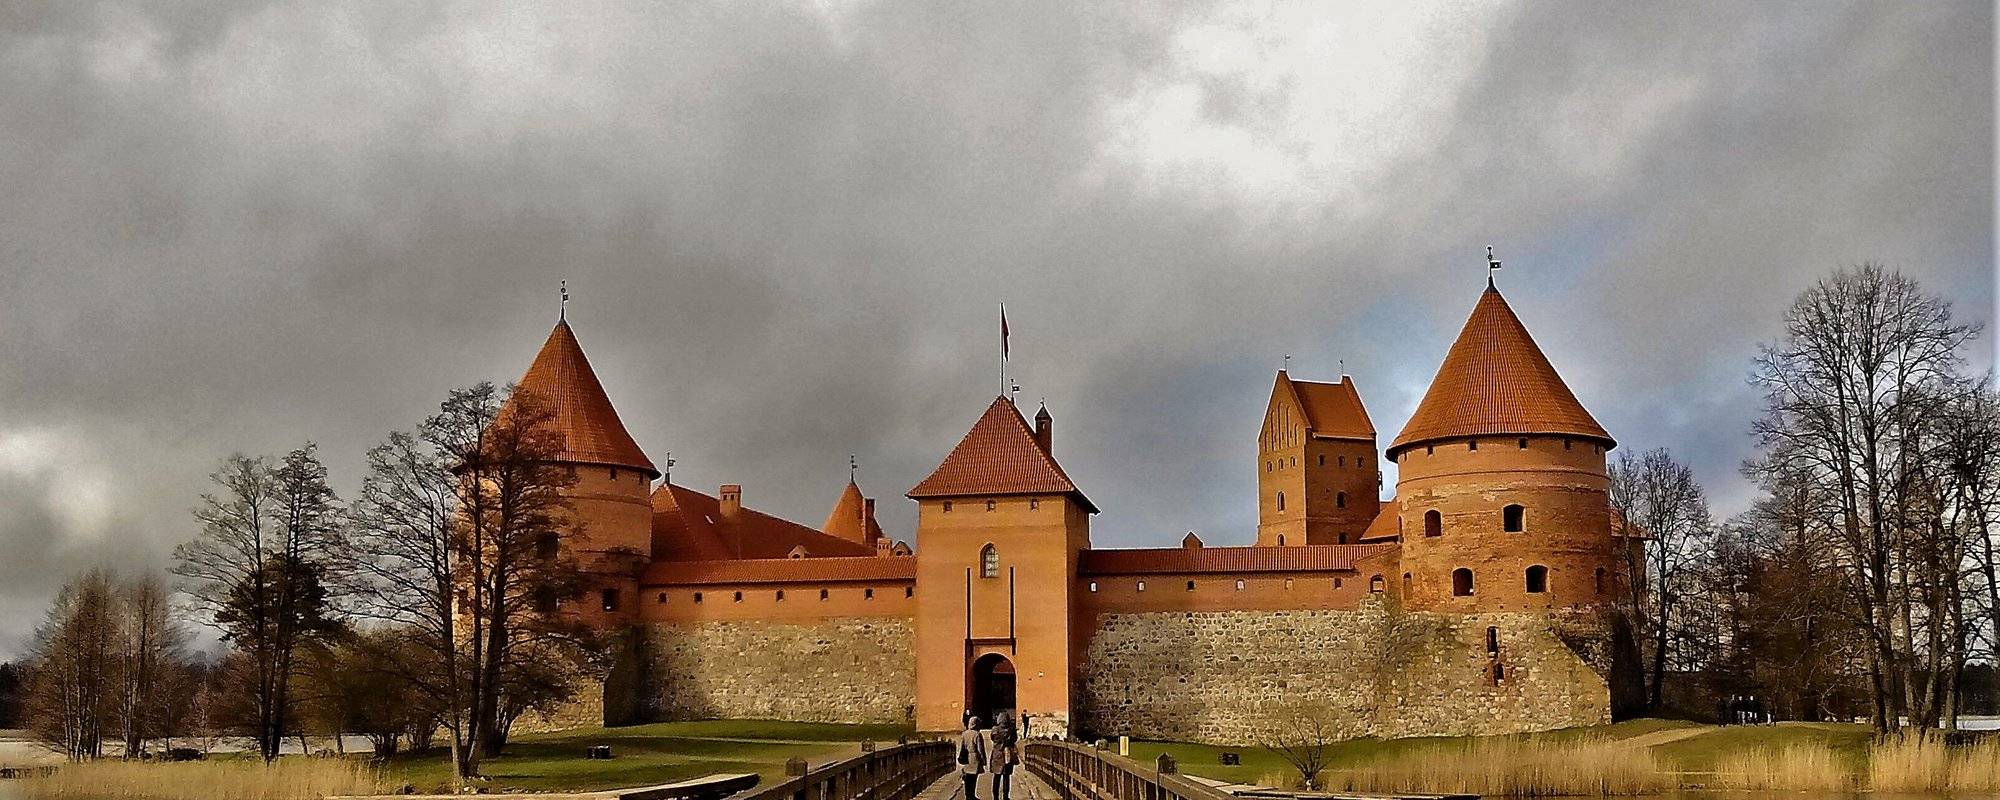 Architectural Photography: Trakai Castle, the iconic landmark of Lithuania